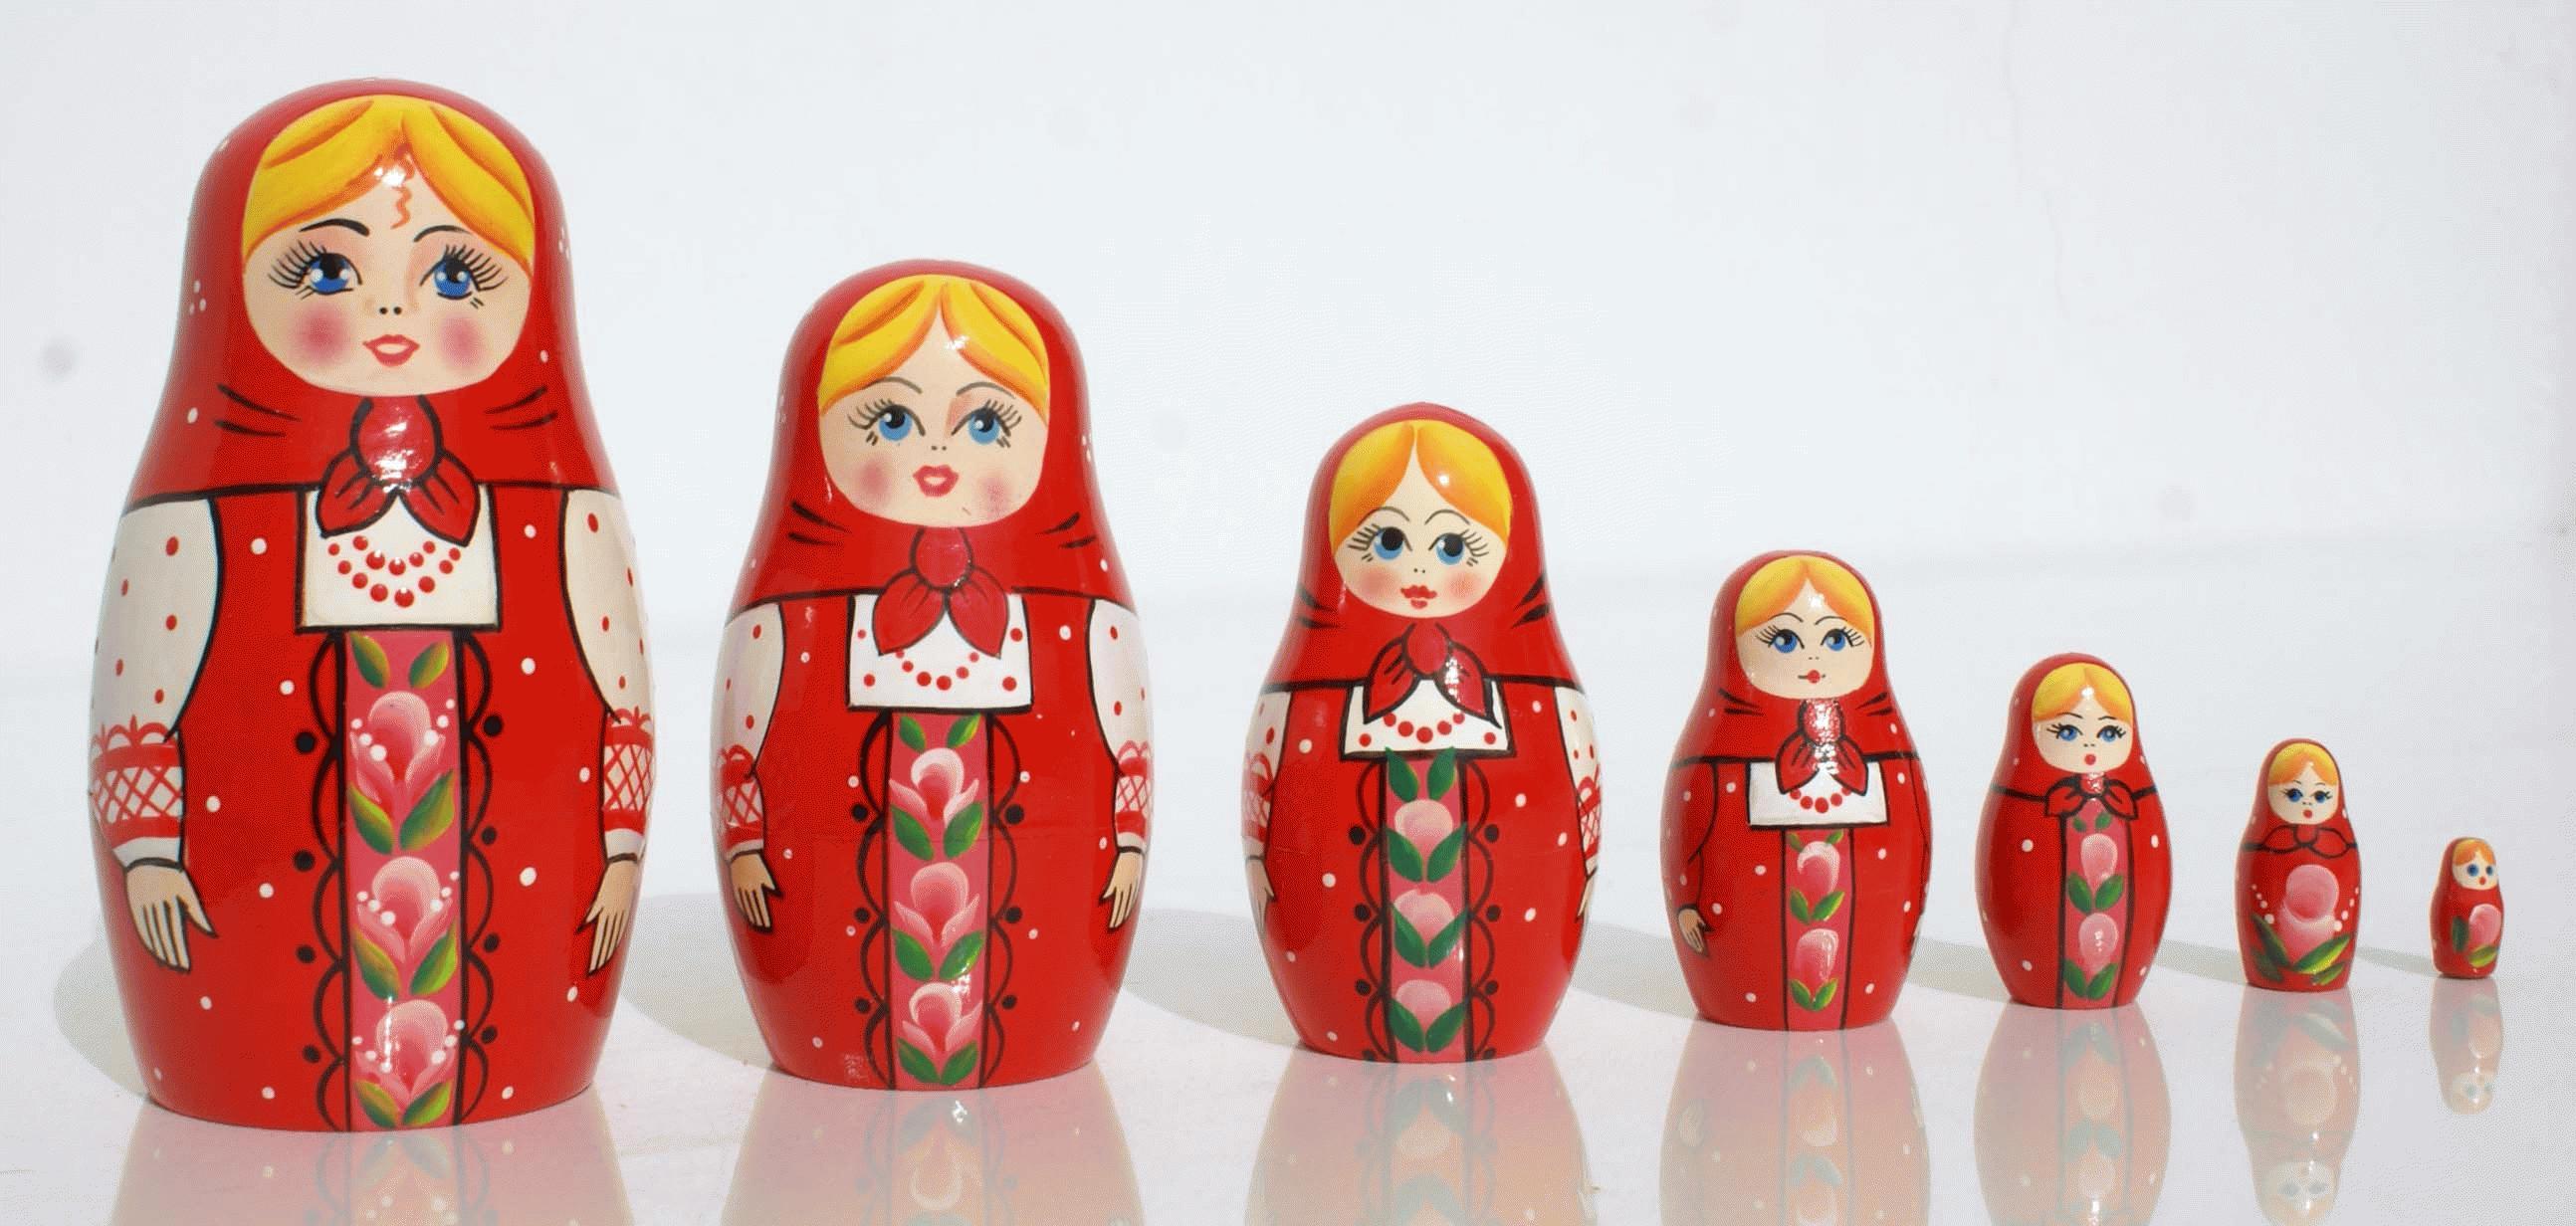 Russian Doll Wallpaper High Quality